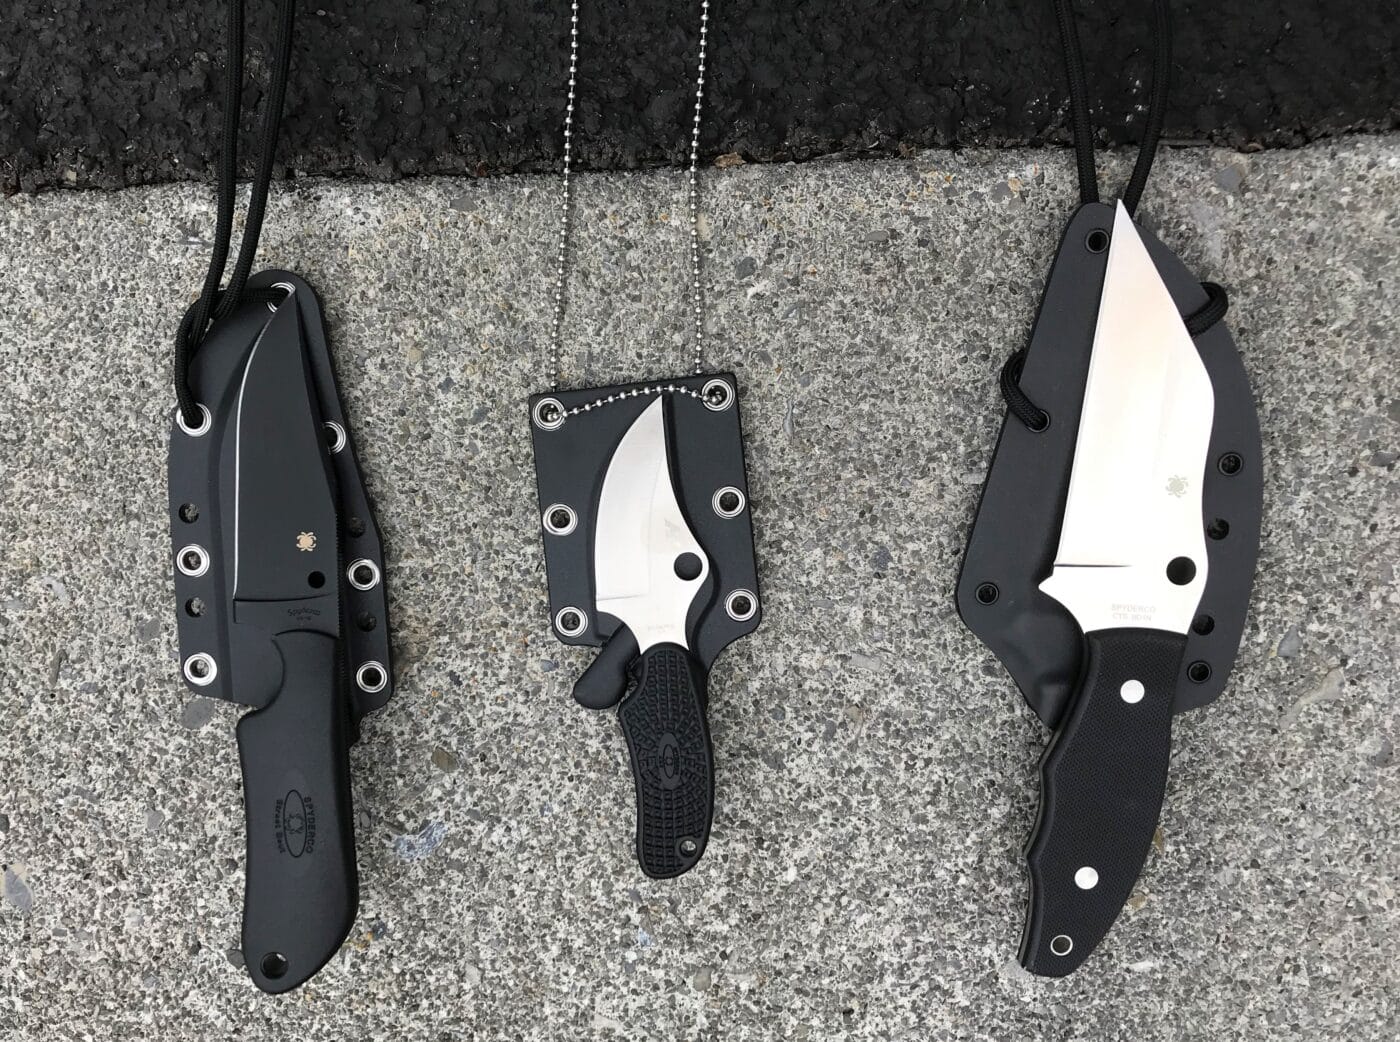 Spyderco fixed blade knives